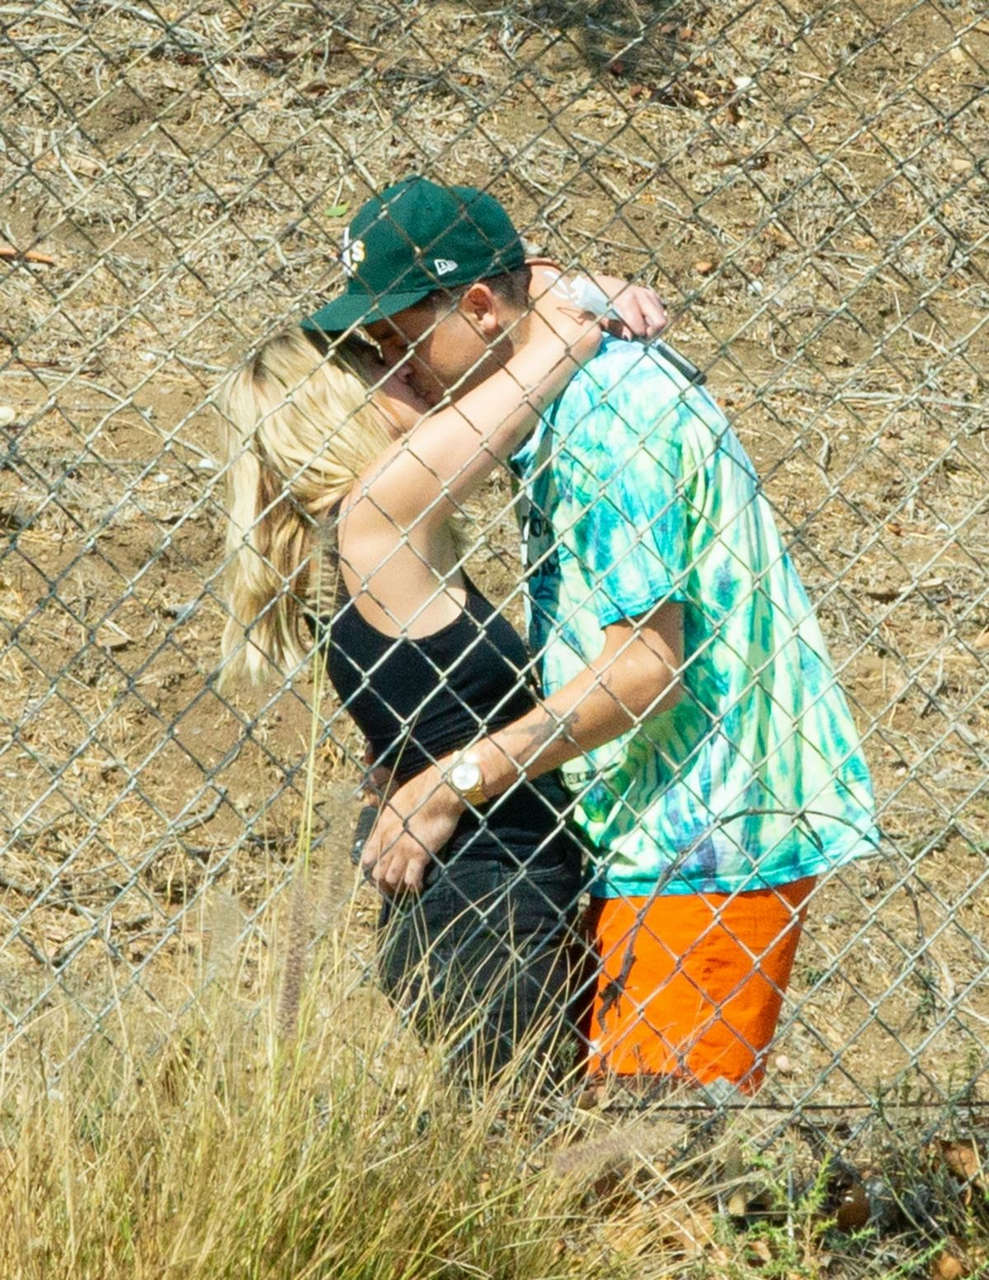 Ashley Benson G Eazy Out Kissing Malibu